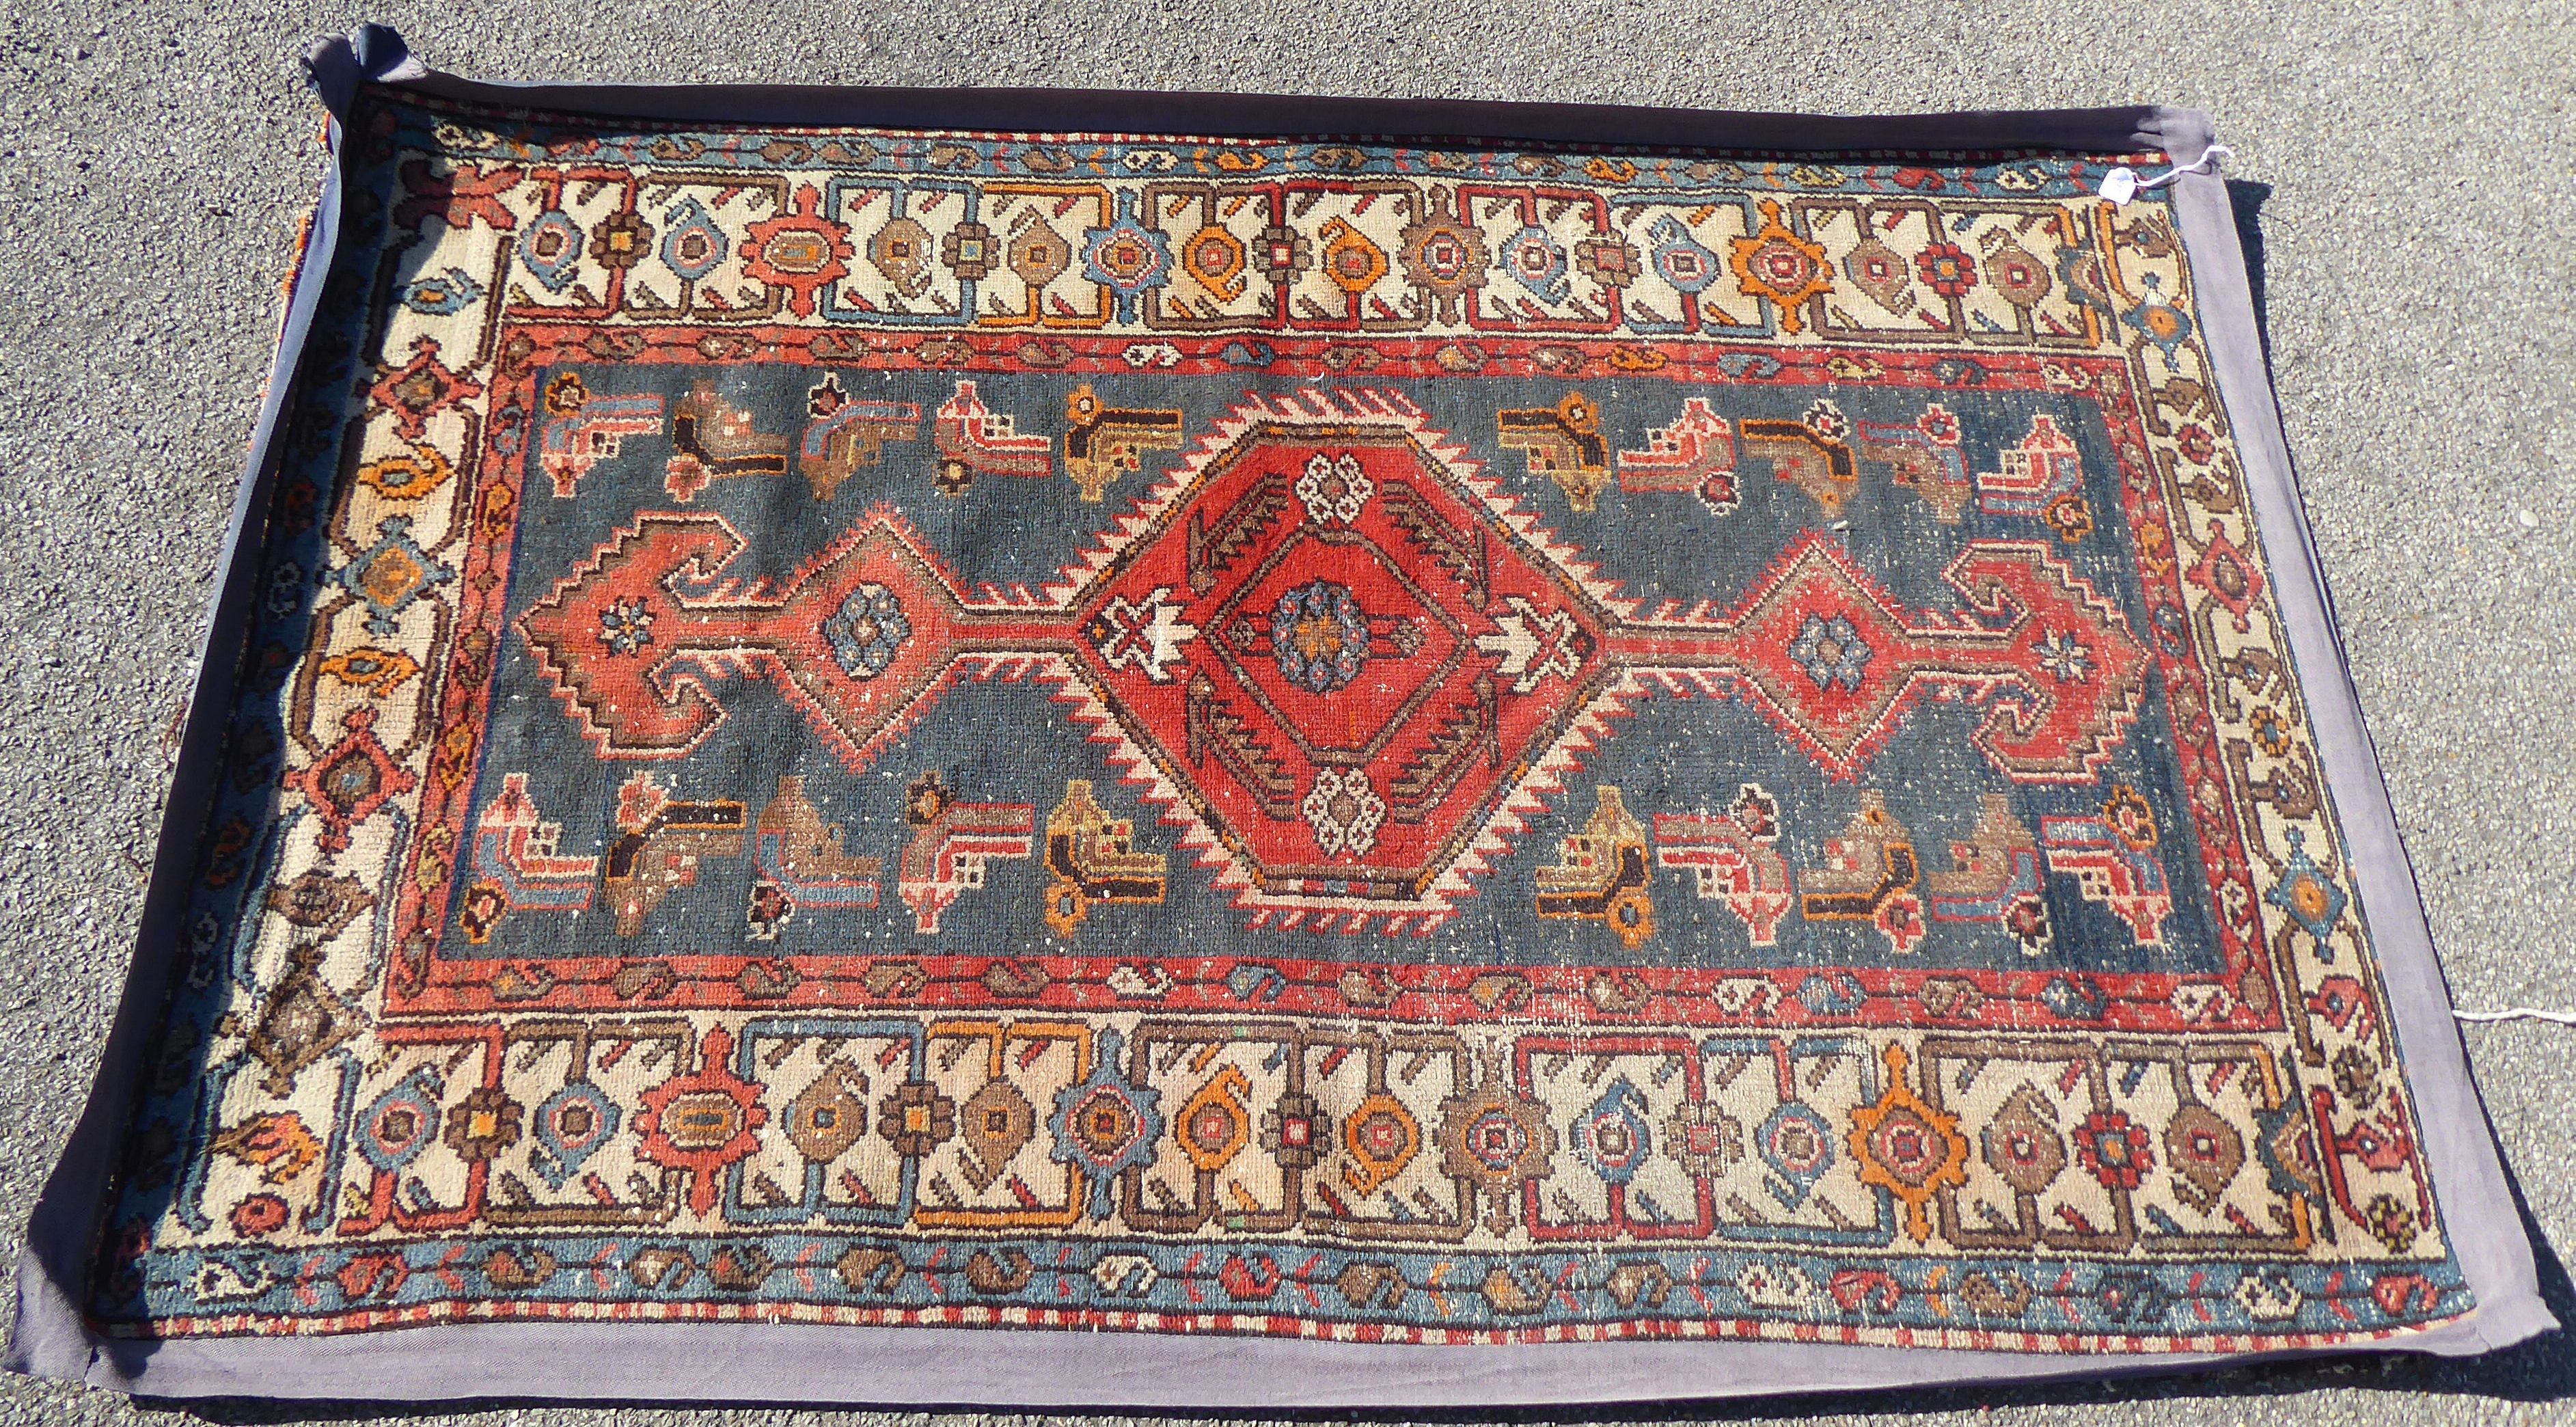 An early 20thC Mazlaghan (Hamadan) rug with central pole medallion, on a blue ground within a